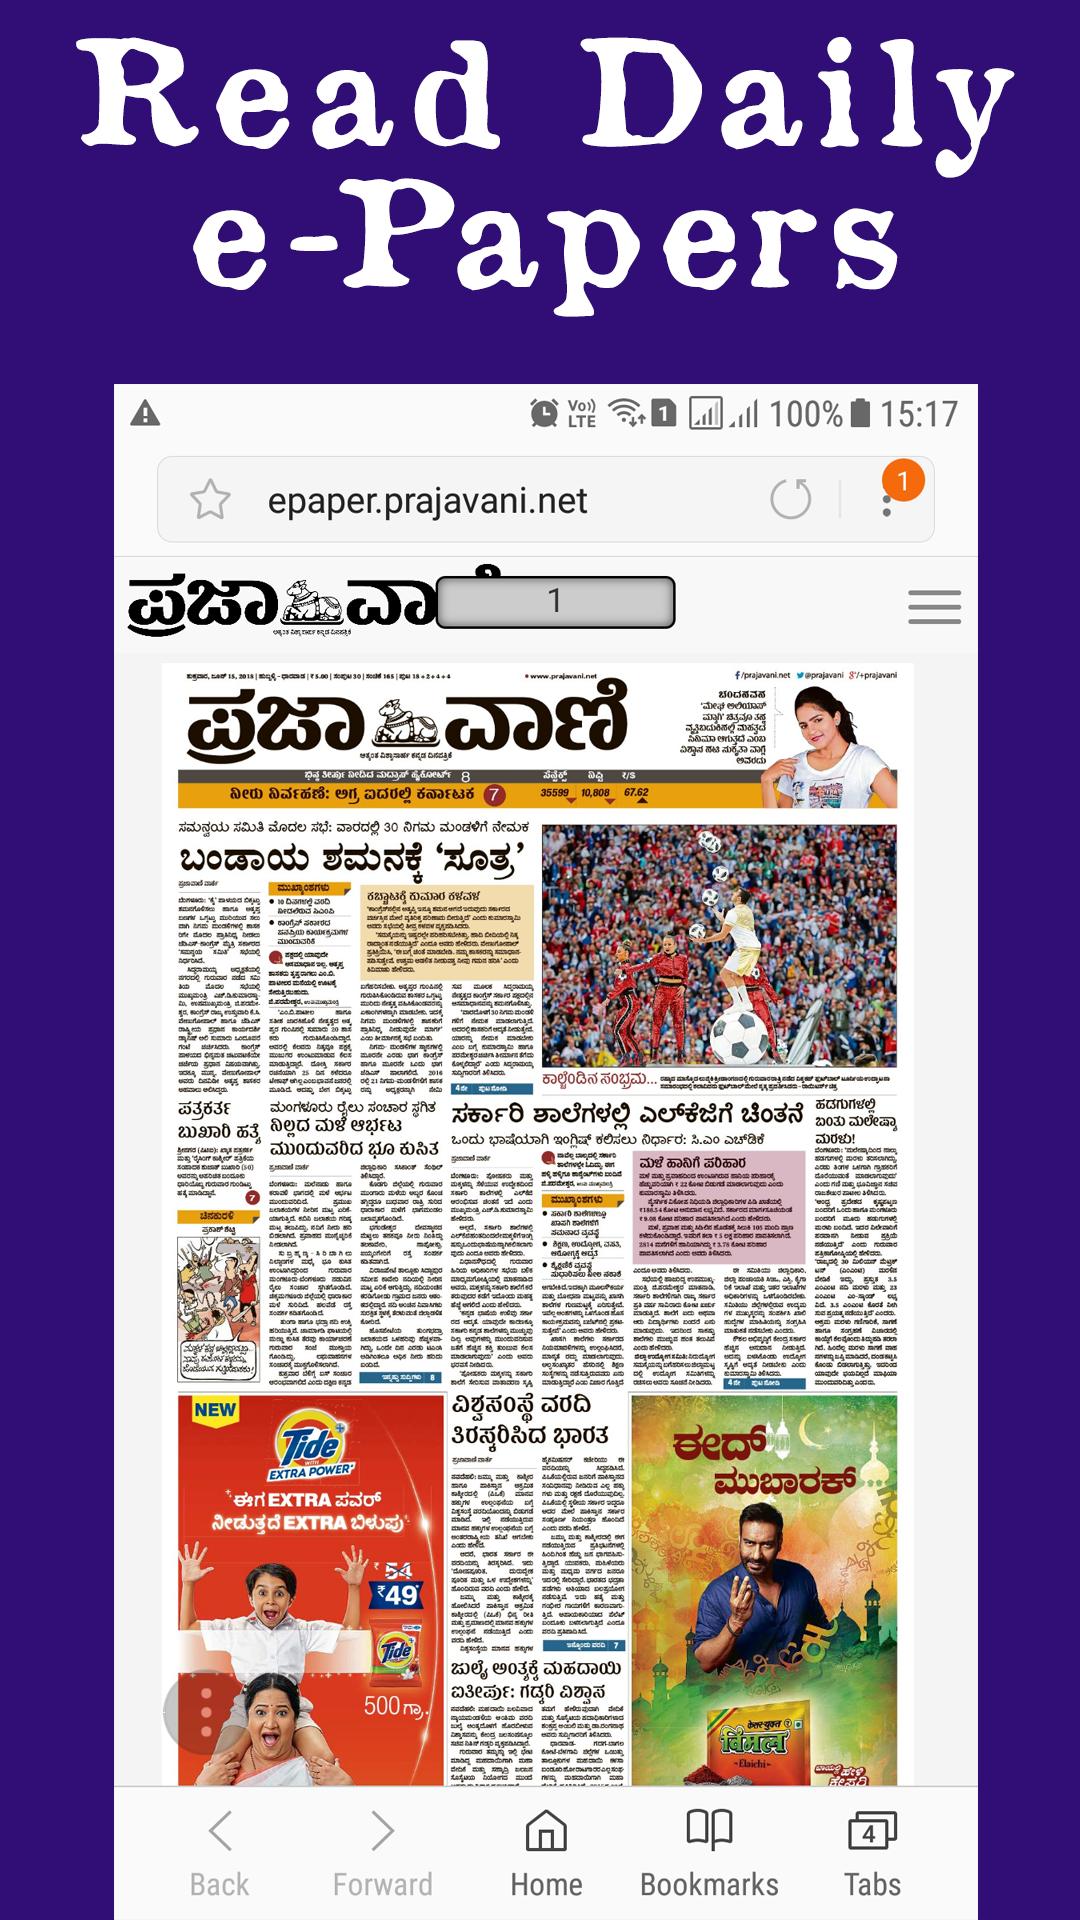 Prajavani news paper